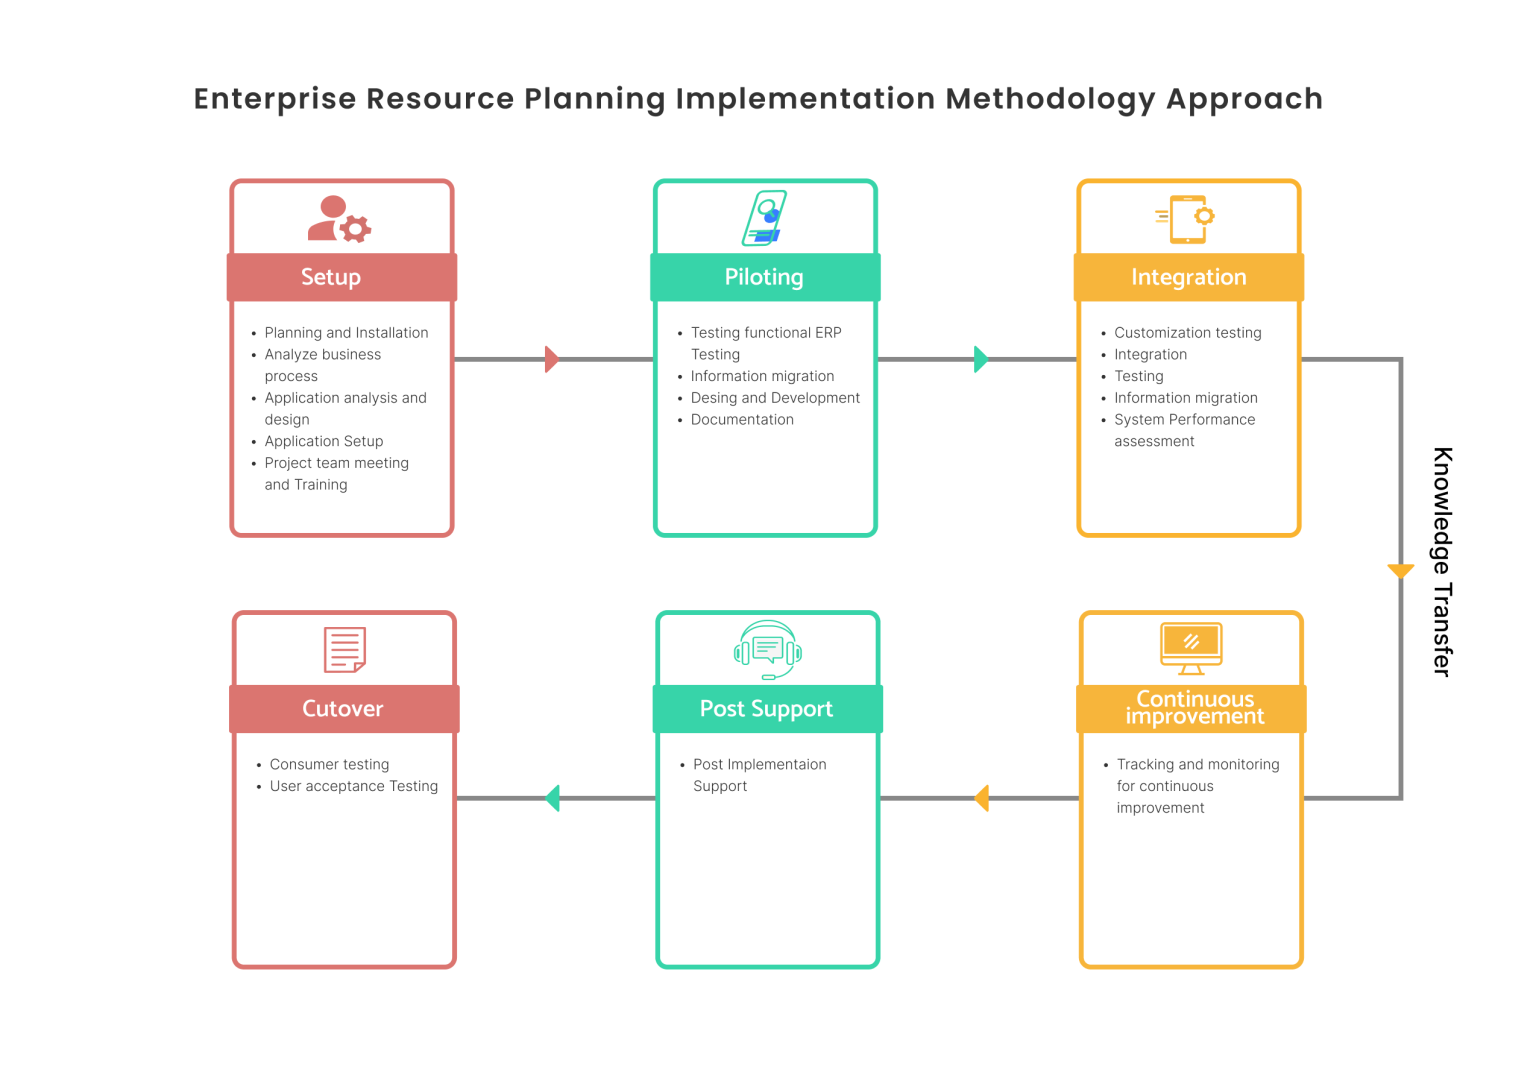 Enterprise resource planning implementation methodology